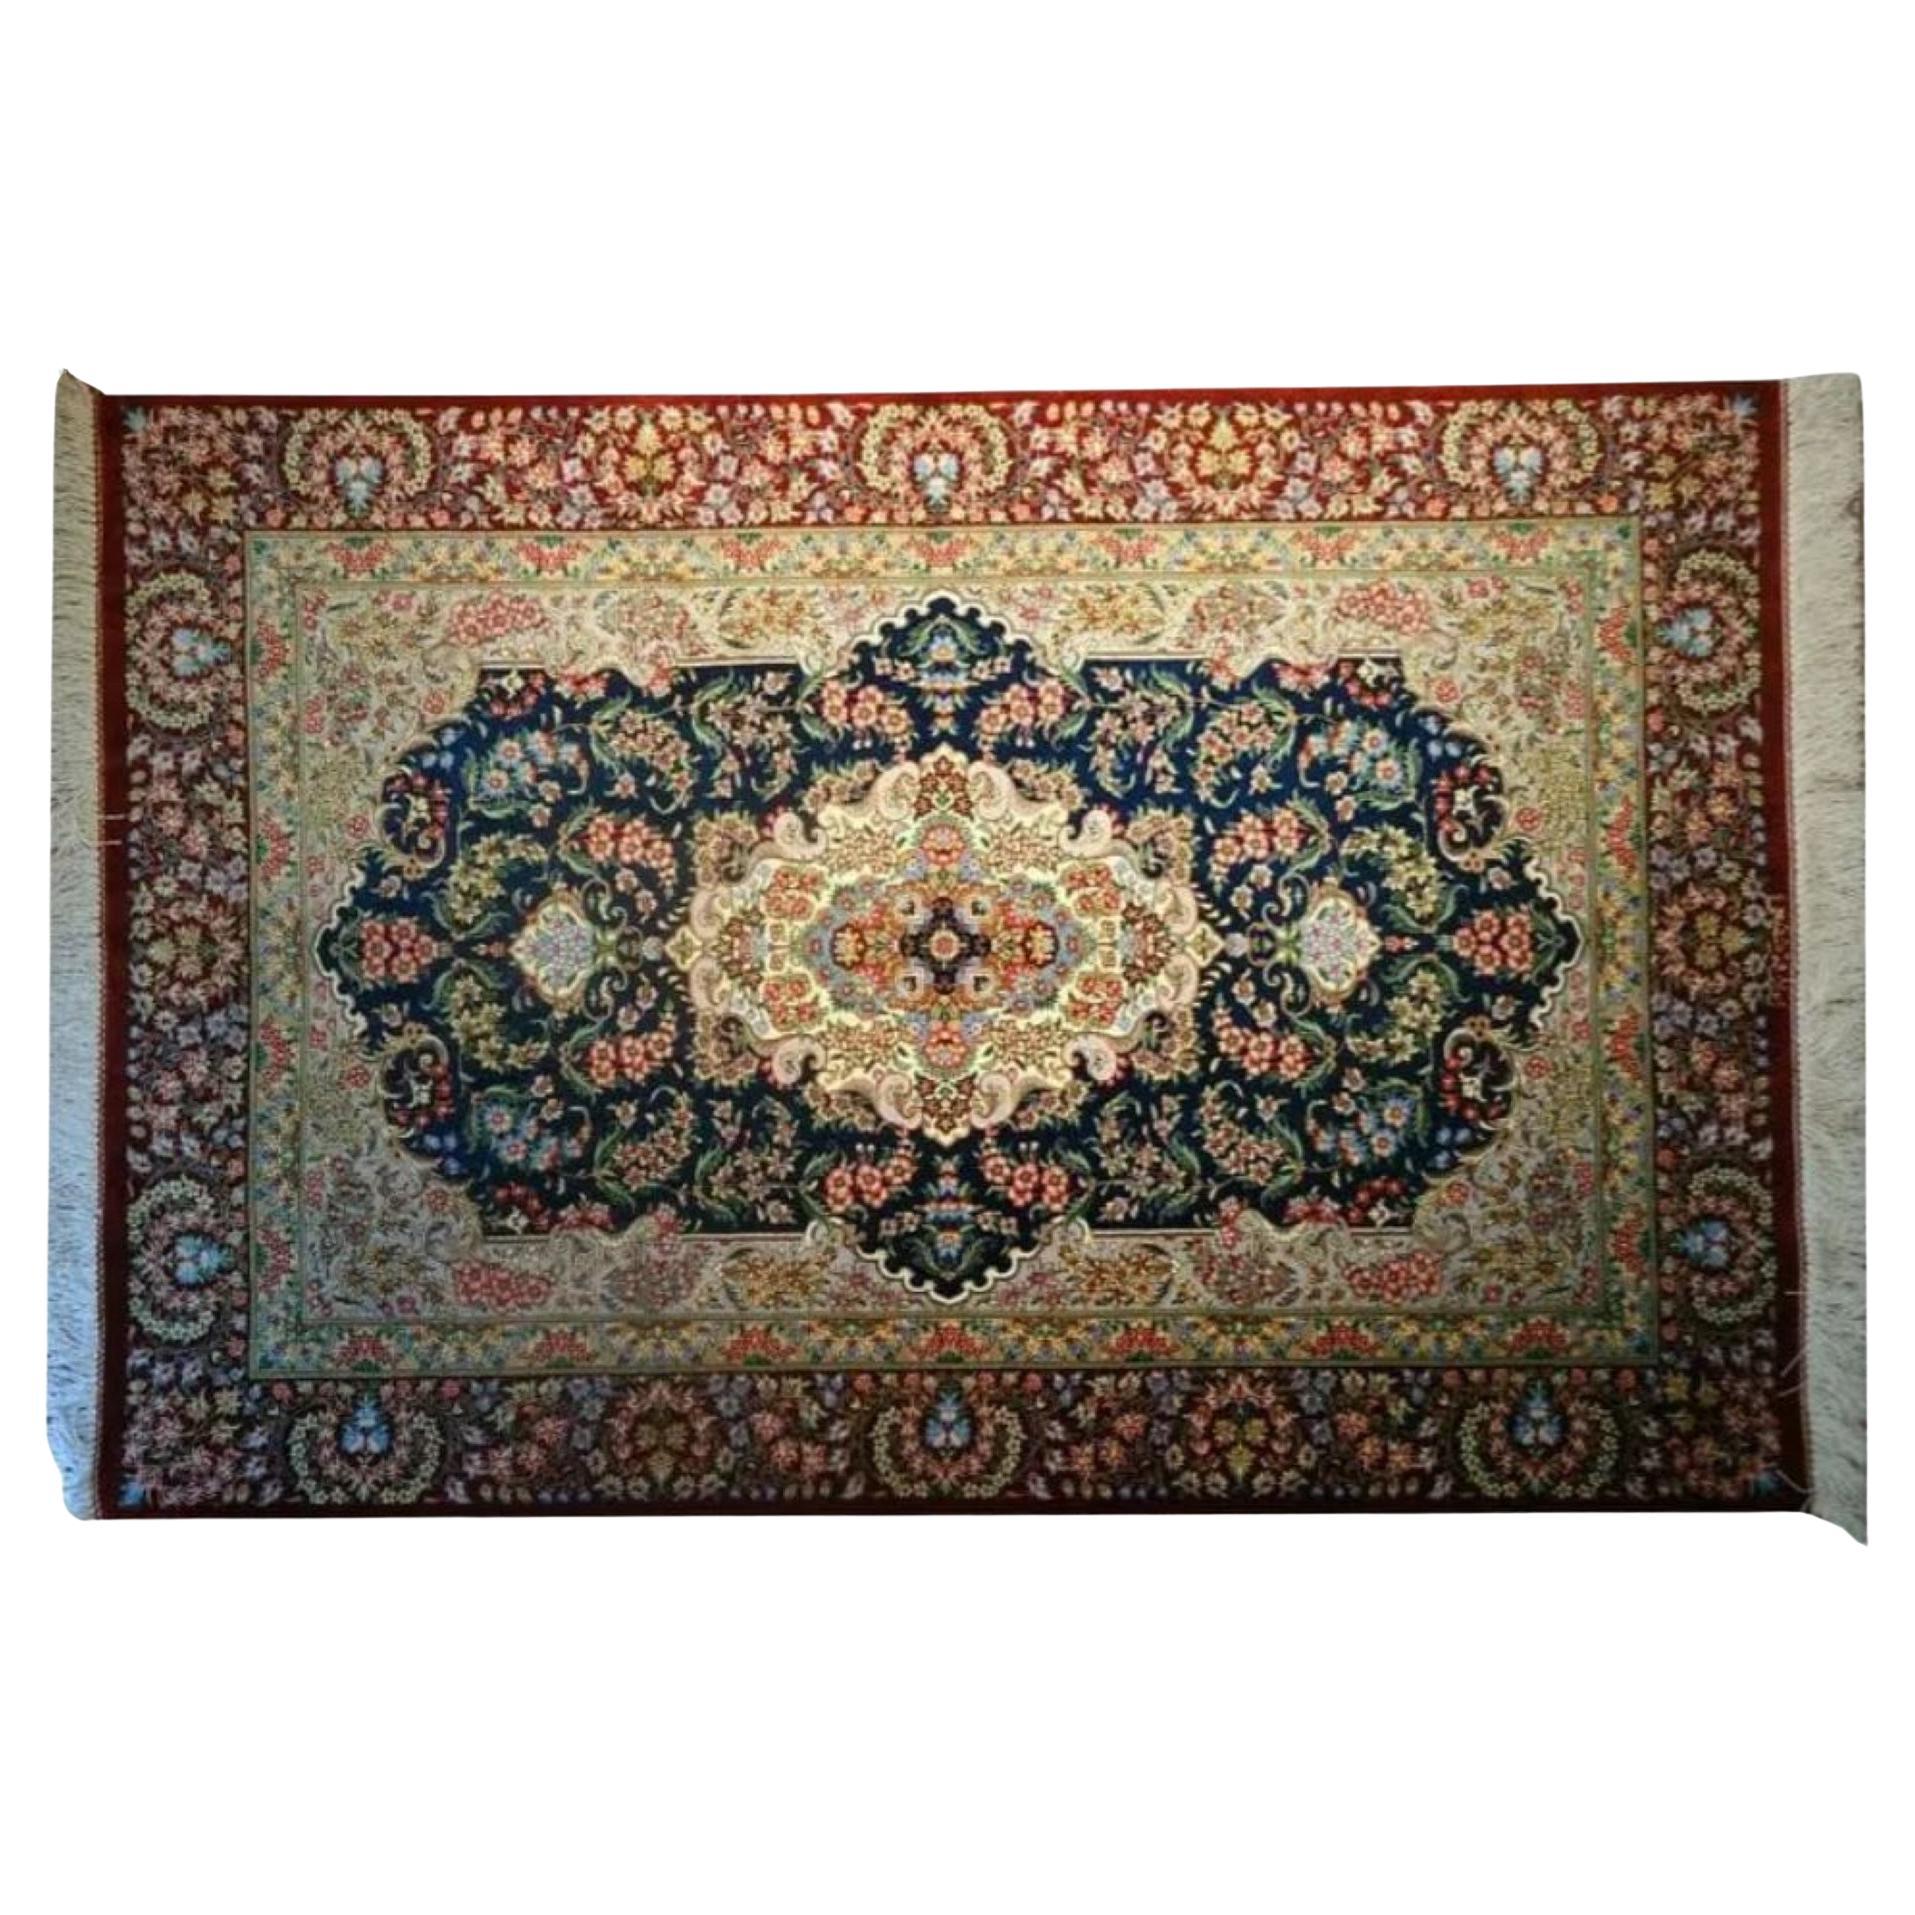 Very fine Persian Silk Ghom - 4.9' x 3.1'